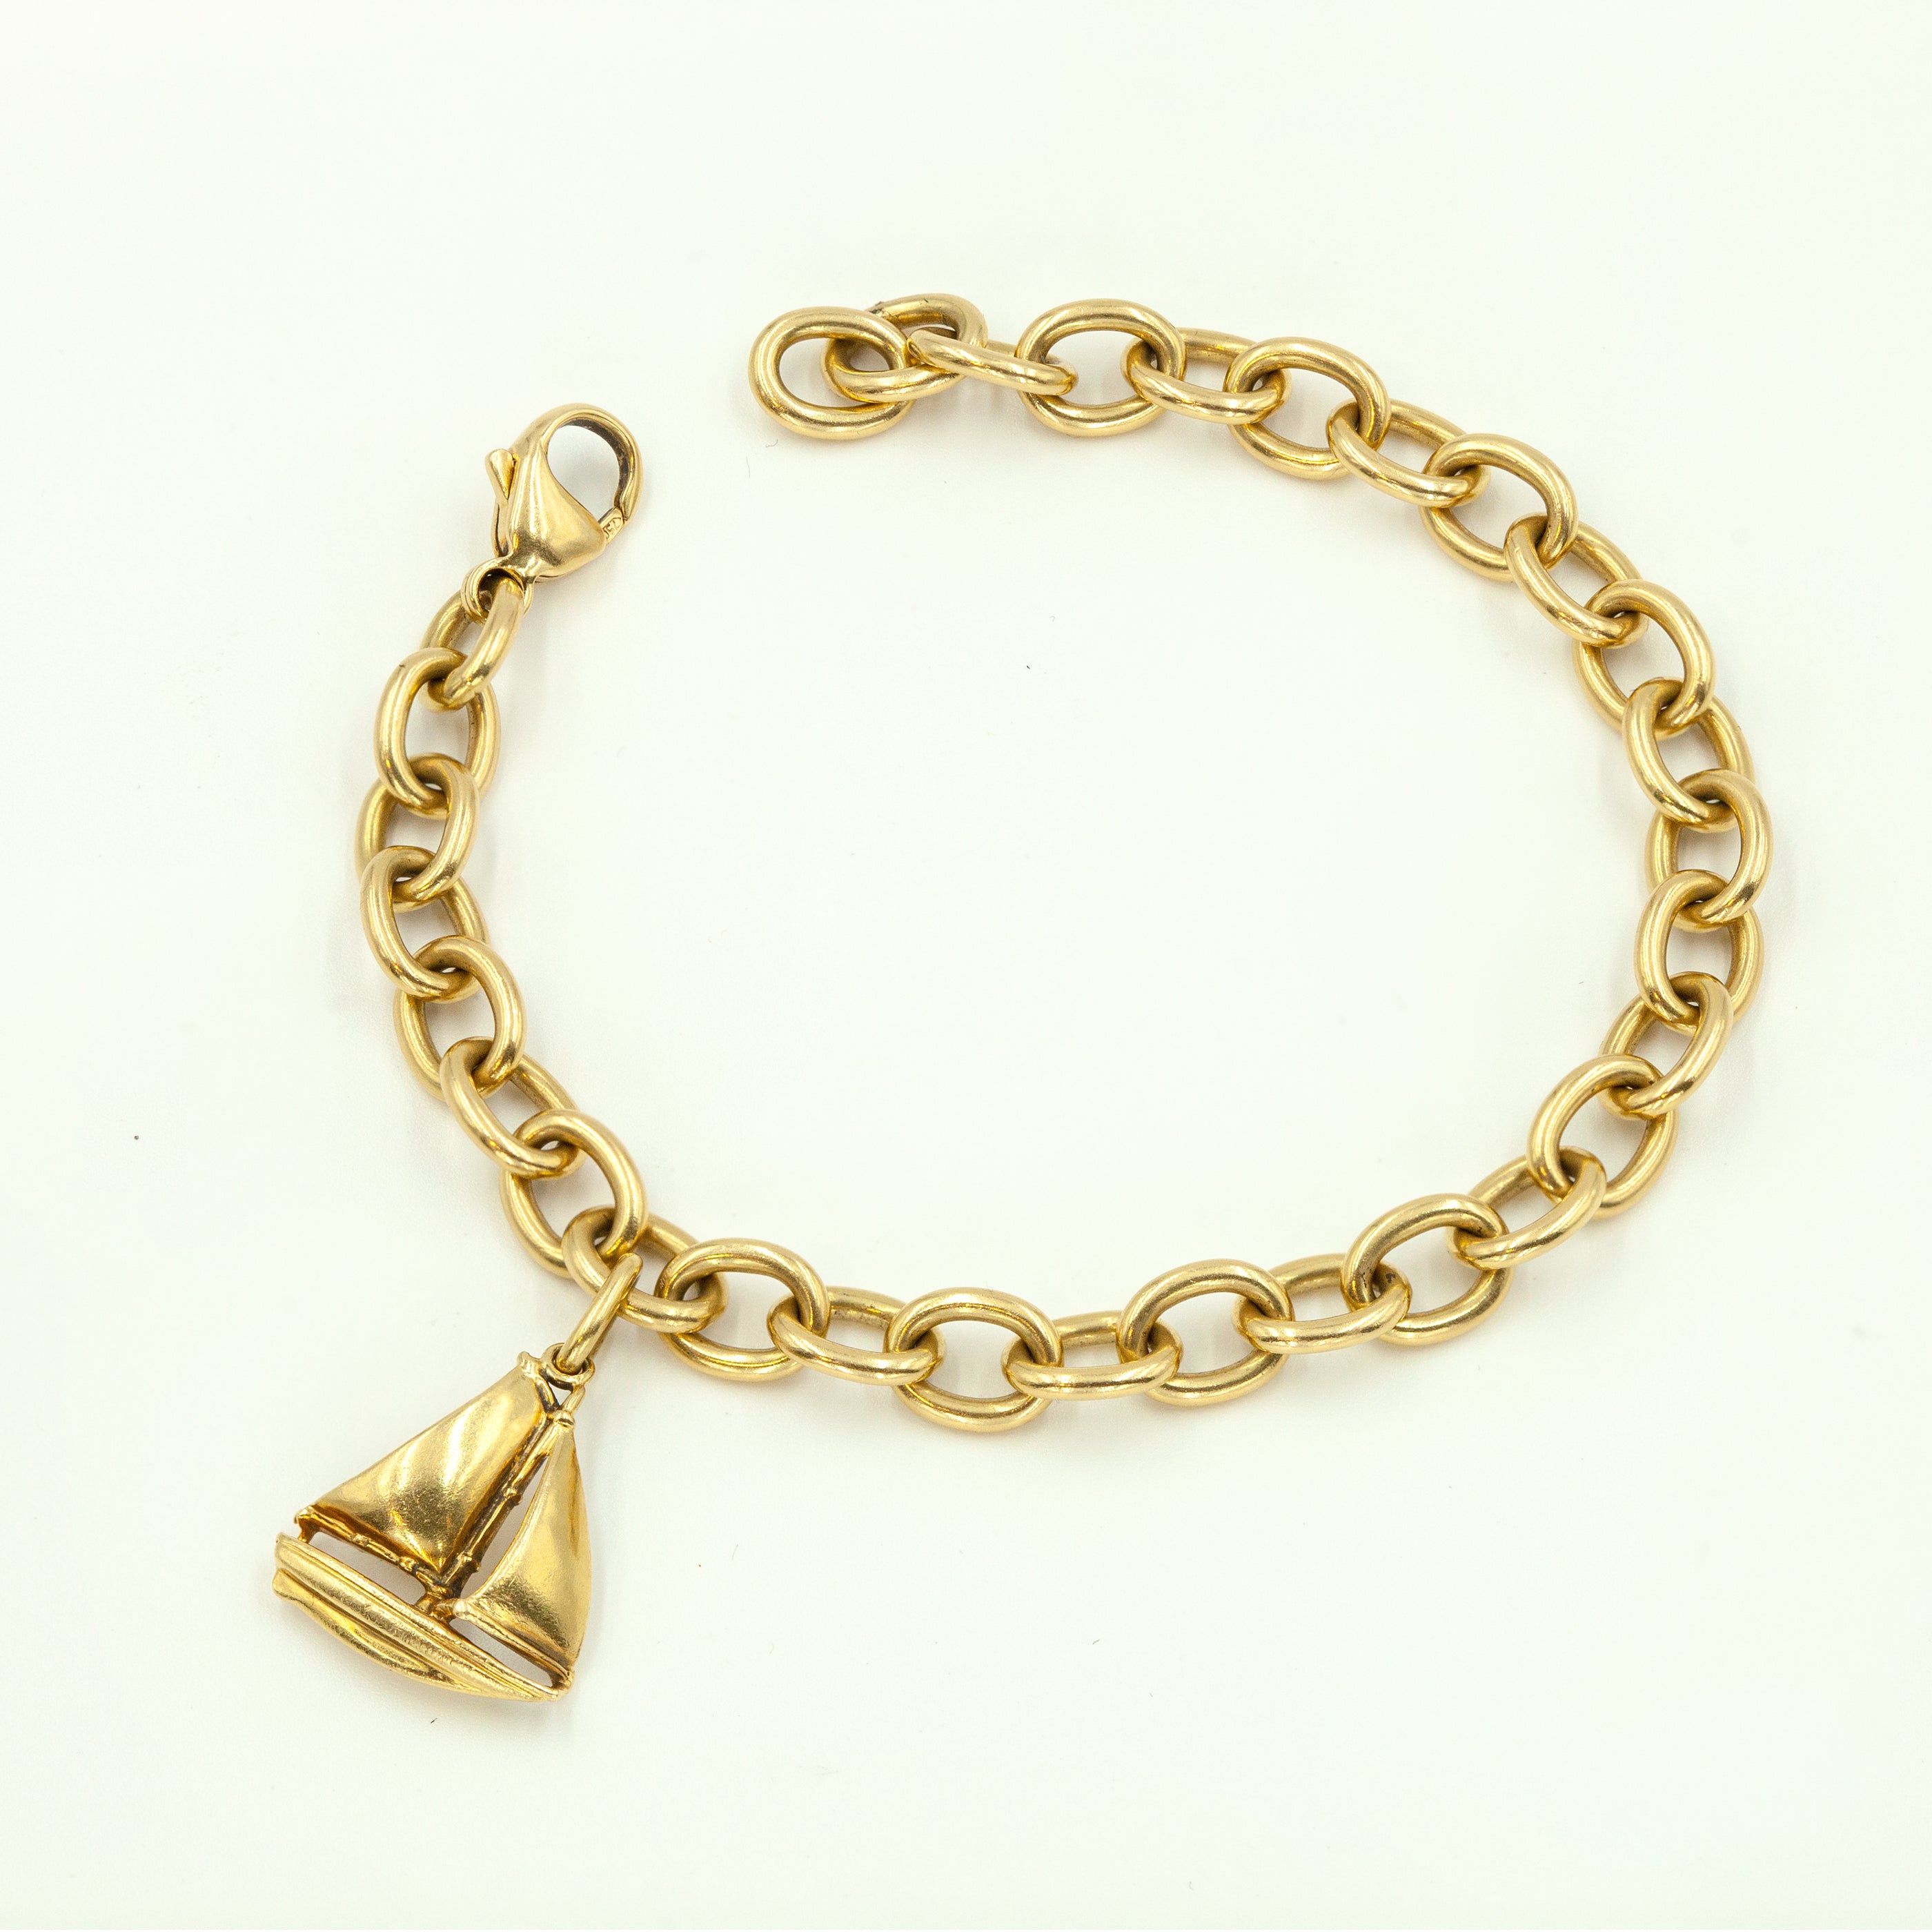 Tiffany & Co. 18k Gold and Diamond Marine Sea Charm Bracelet by Elsa  Peretti